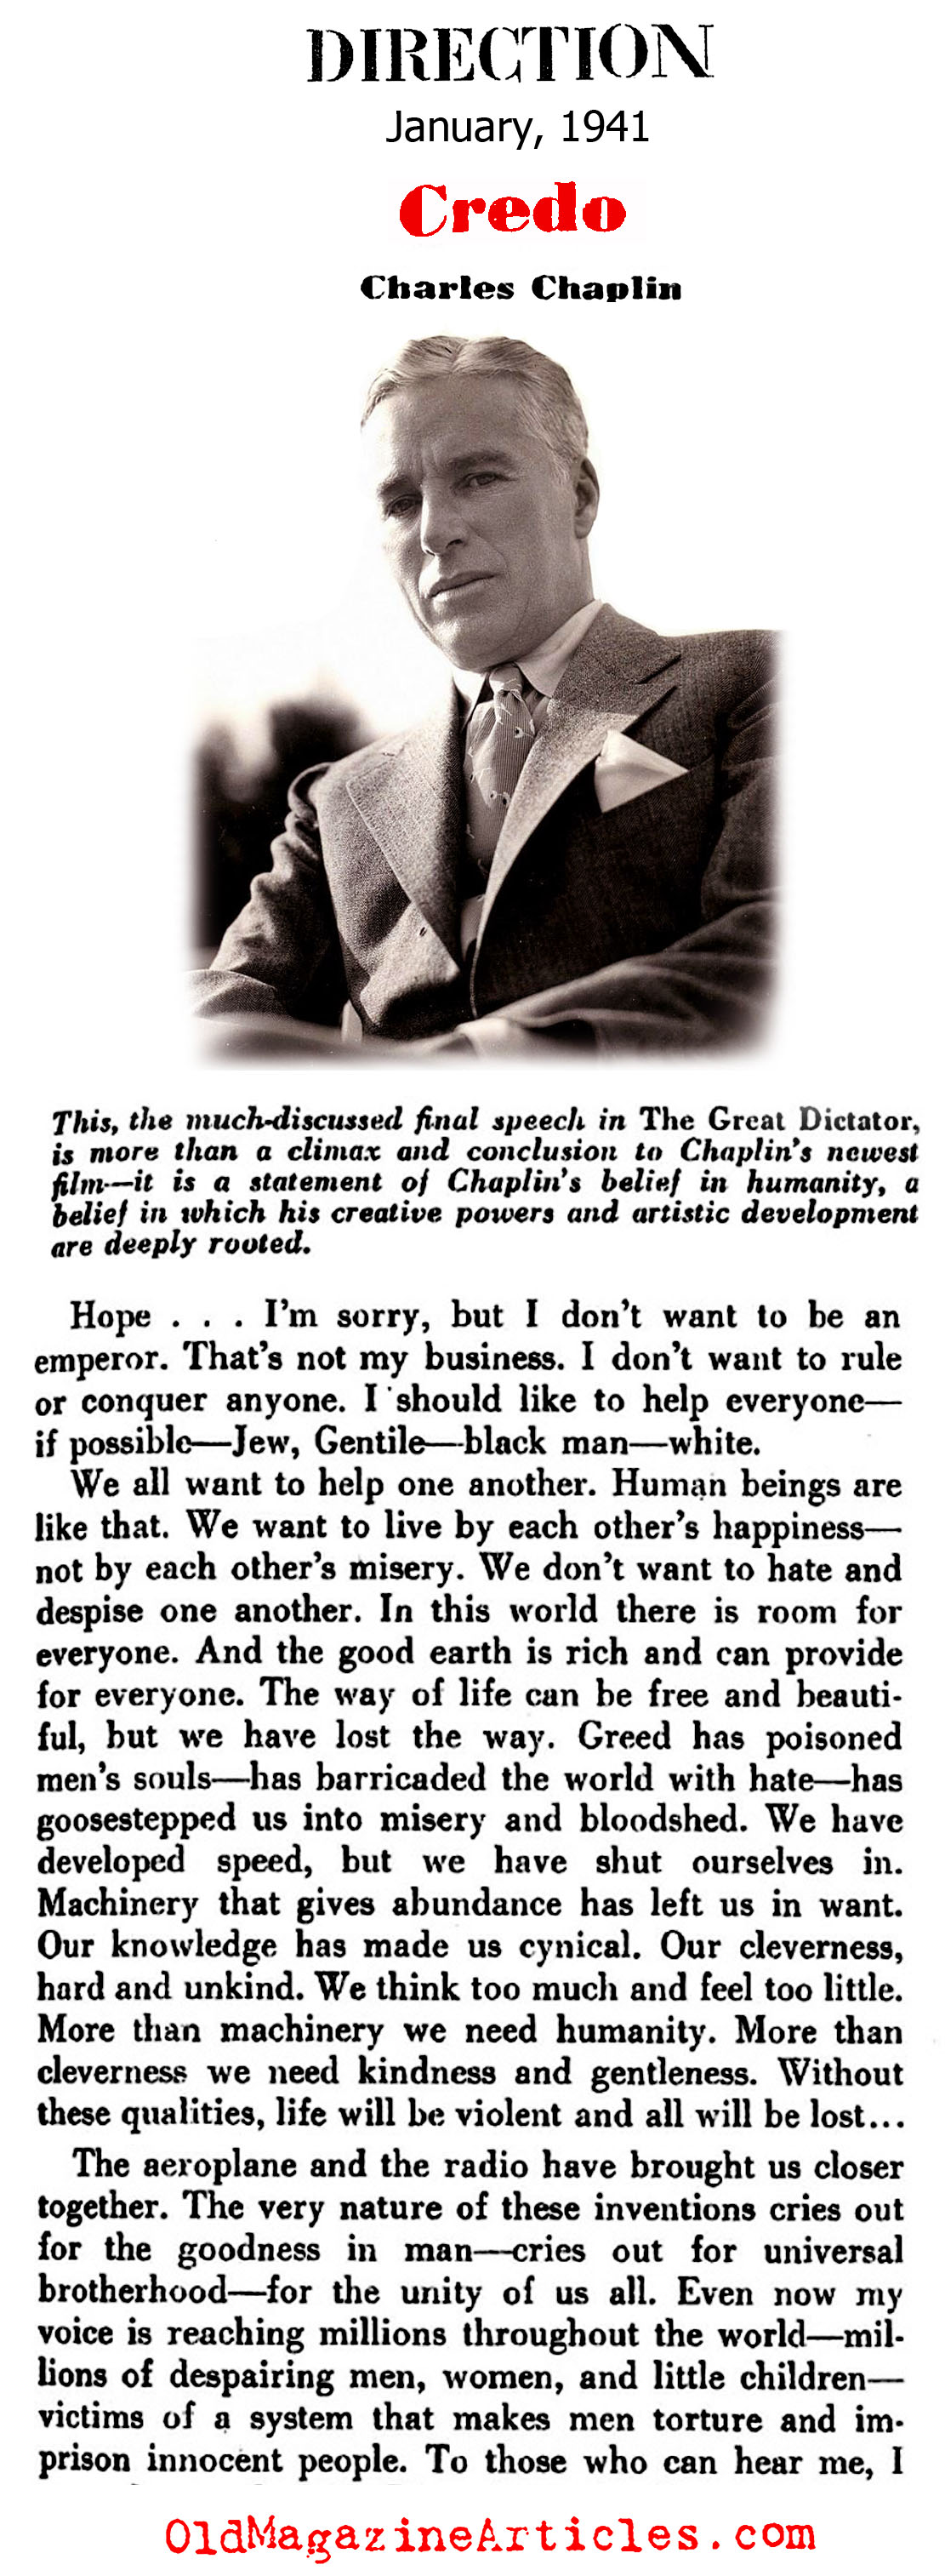 Charlie Chaplin's Credo (Direction Magazine, 1941)